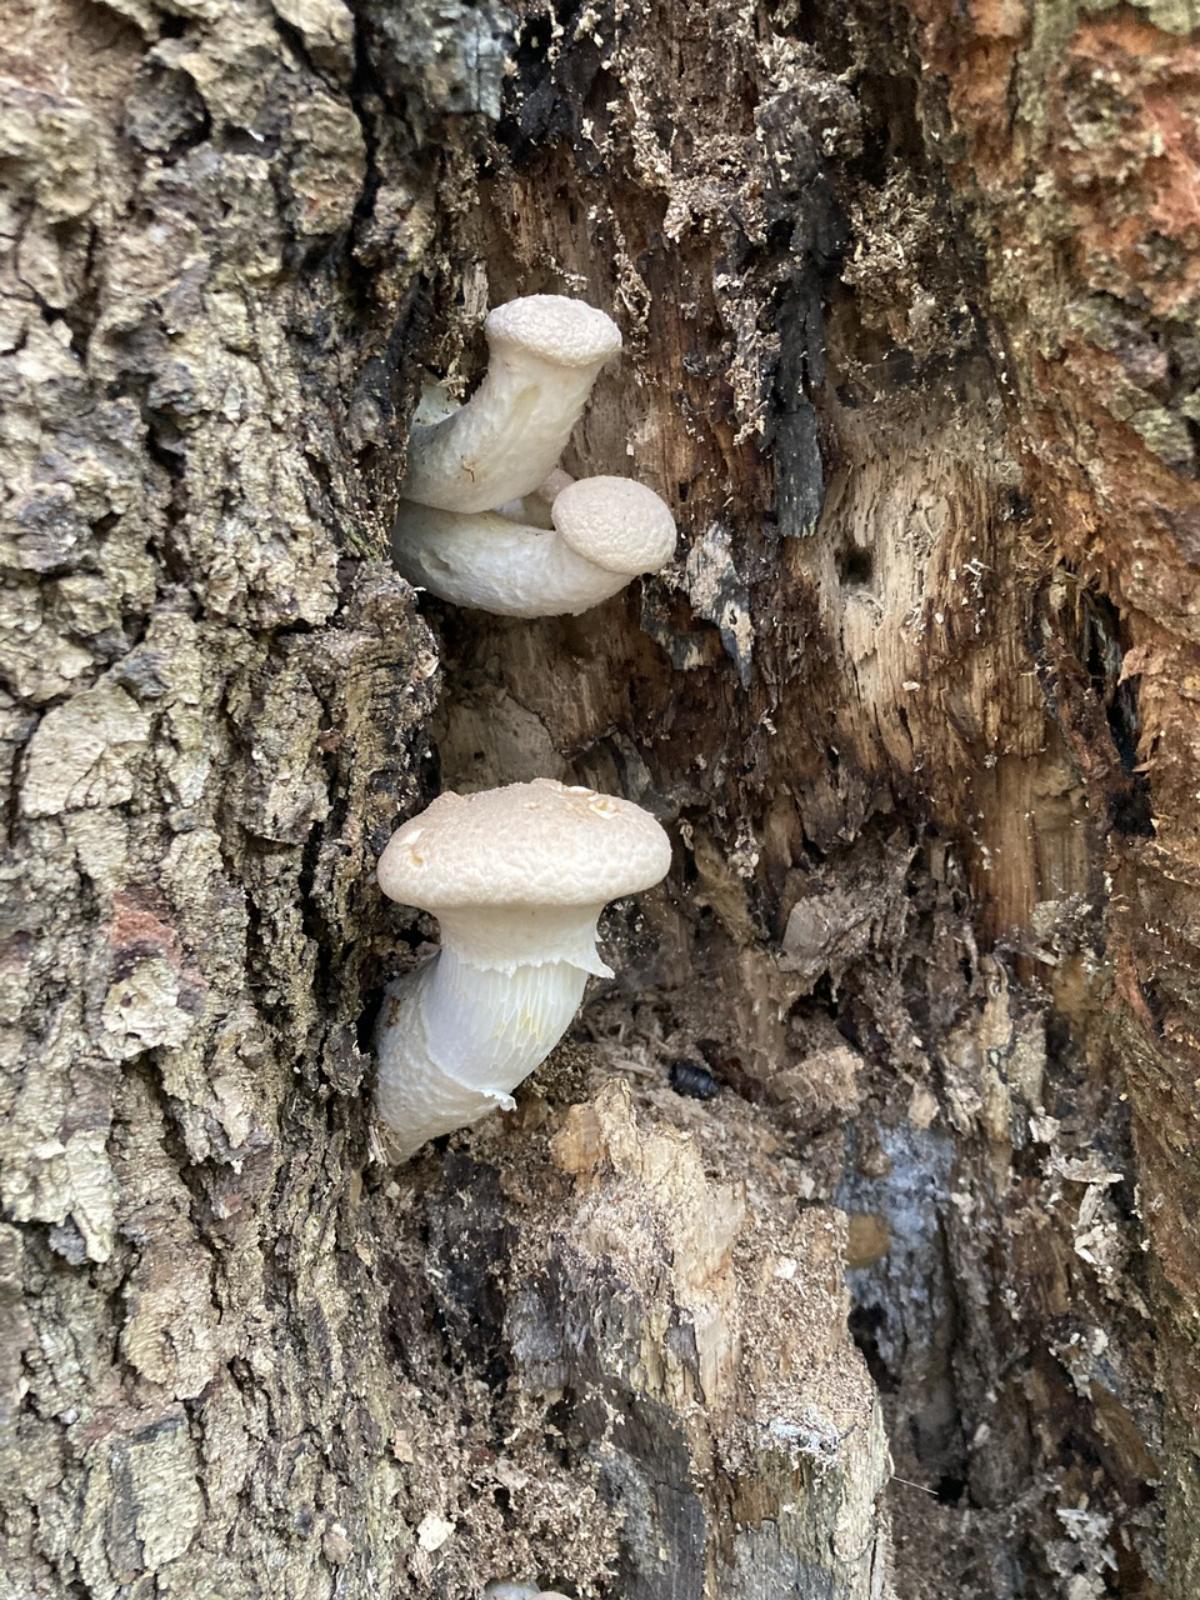 baby veiled oyster mushrooms